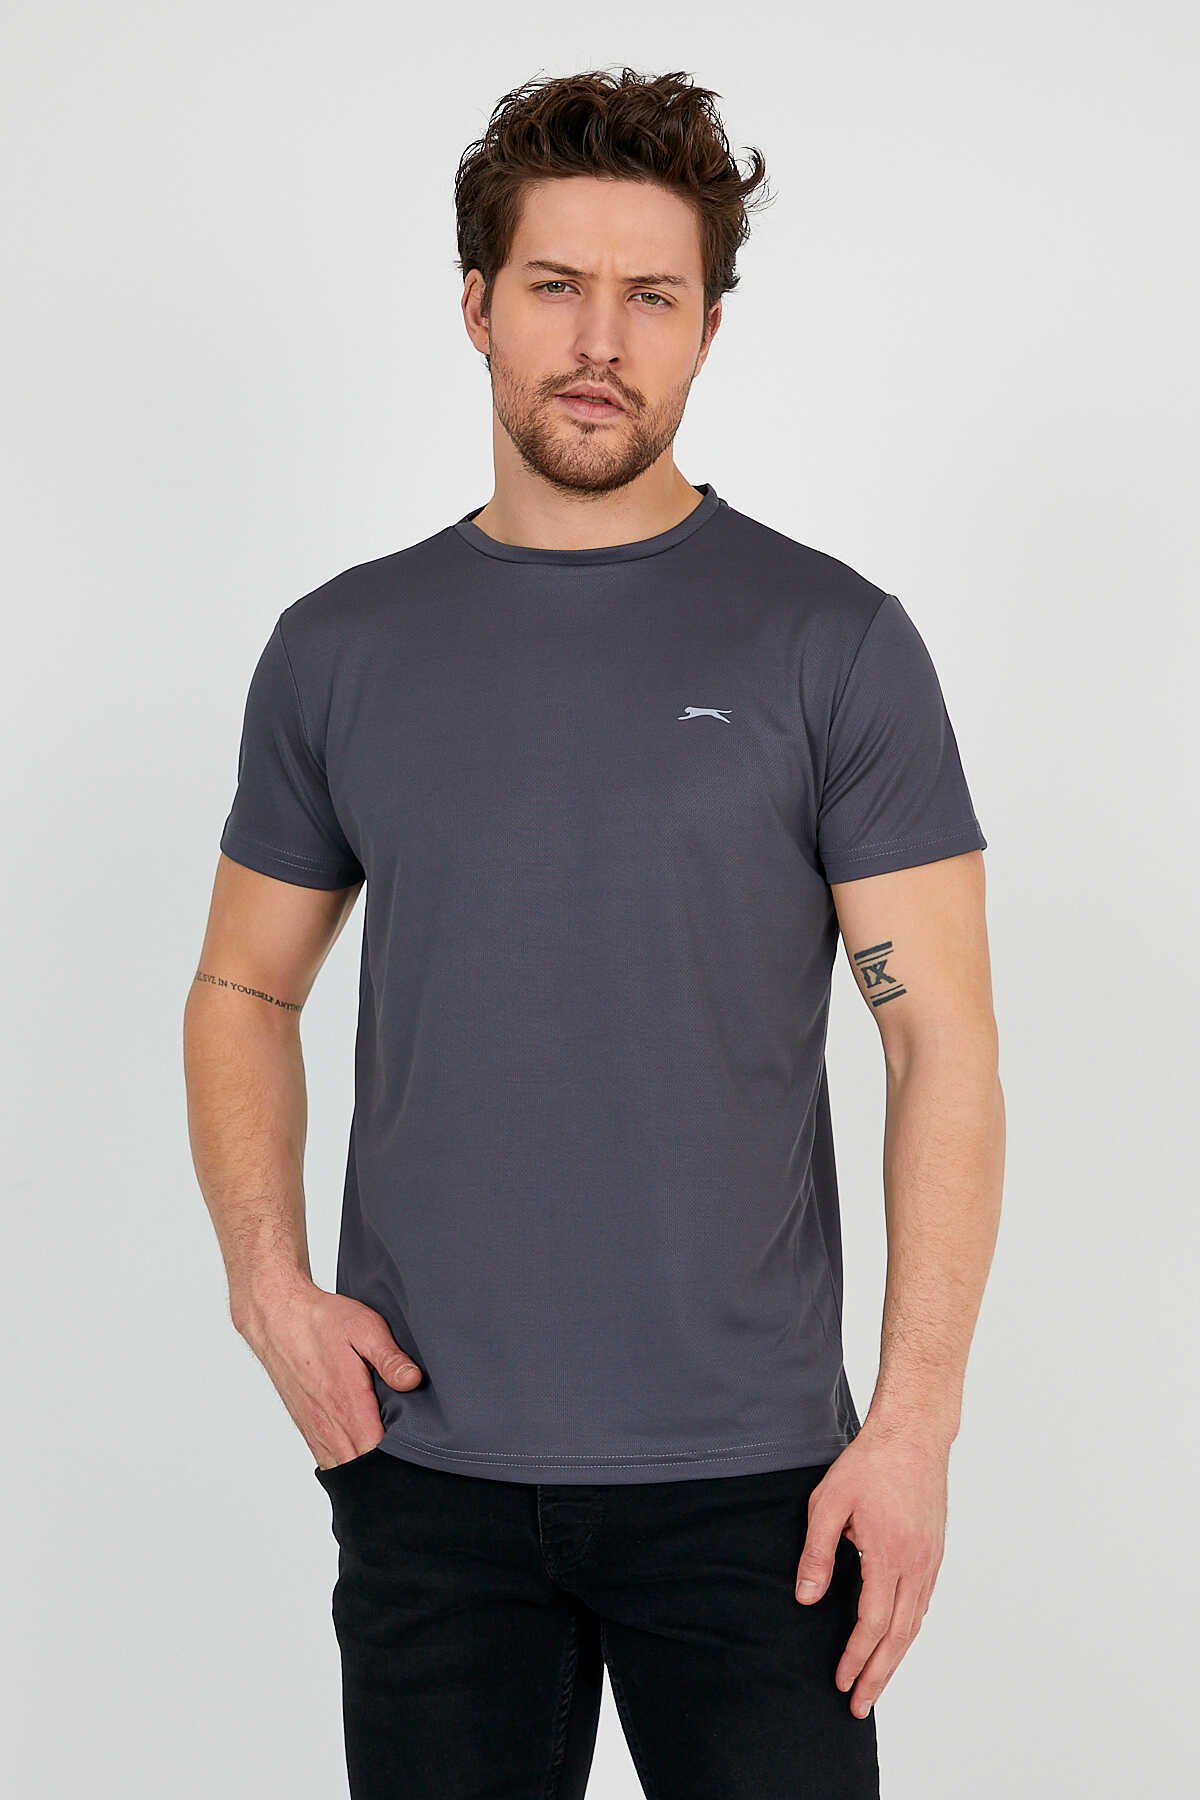 Slazenger - REPUBLIC Erkek Kısa Kol T-Shirt Koyu Gri